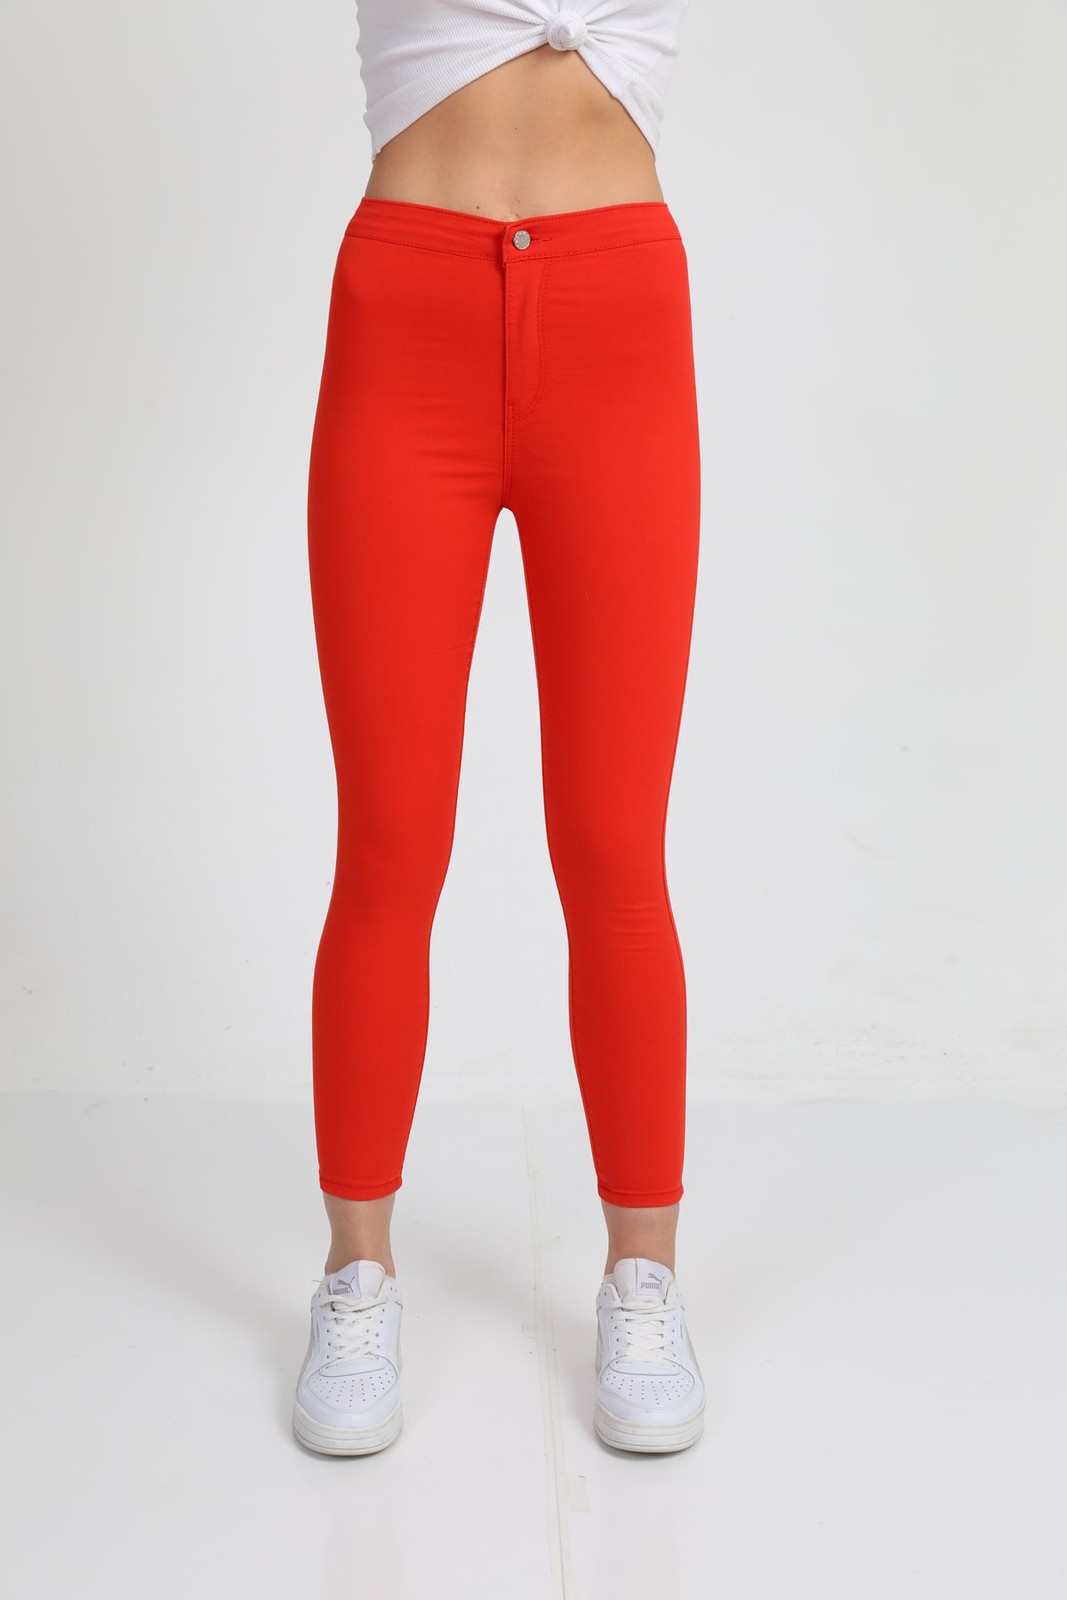 BİKELİFEJNS Women's Red High Waist Lycra Leggings Trousers